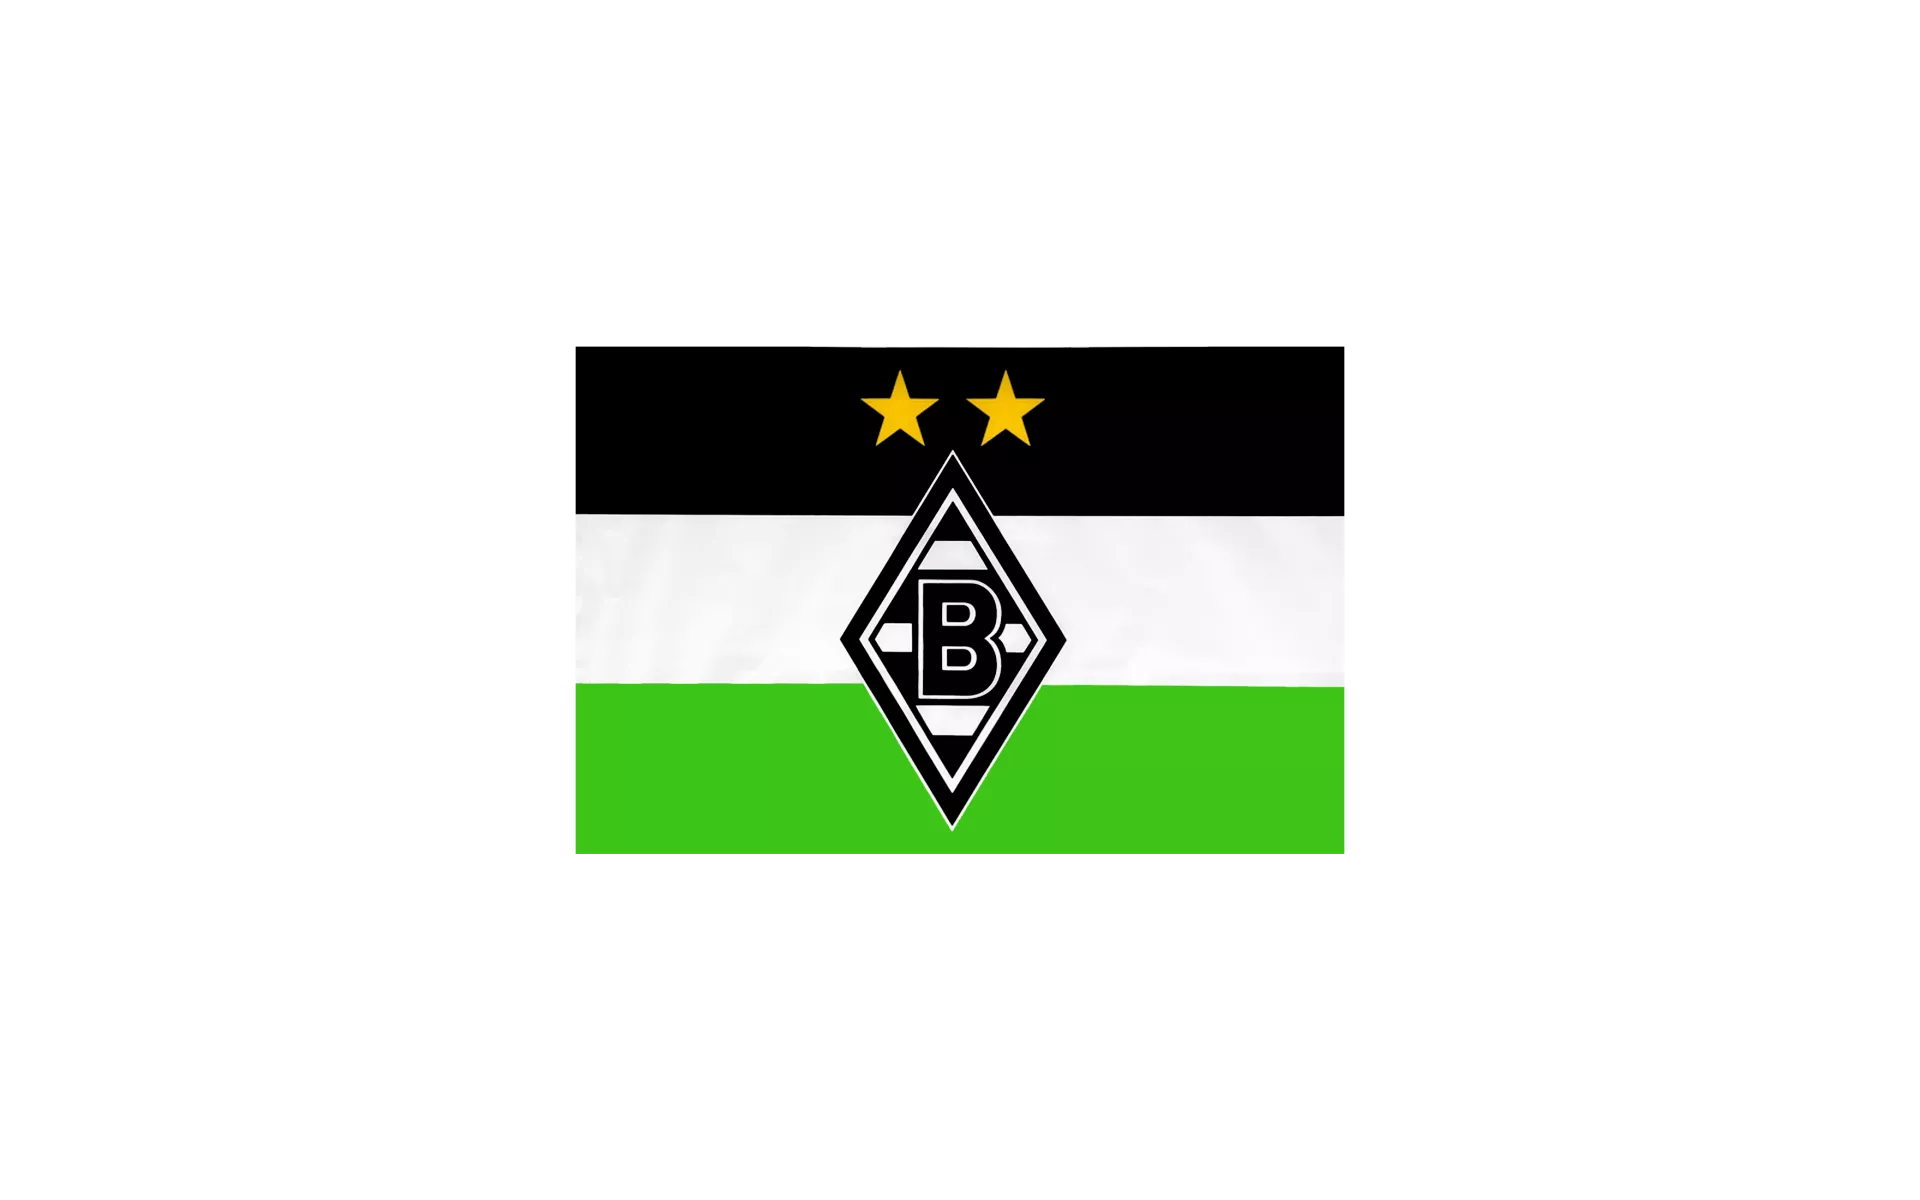 Fahne Gladbach Tradition 1900 Hissflagge 90 x 150 cm Flagge 